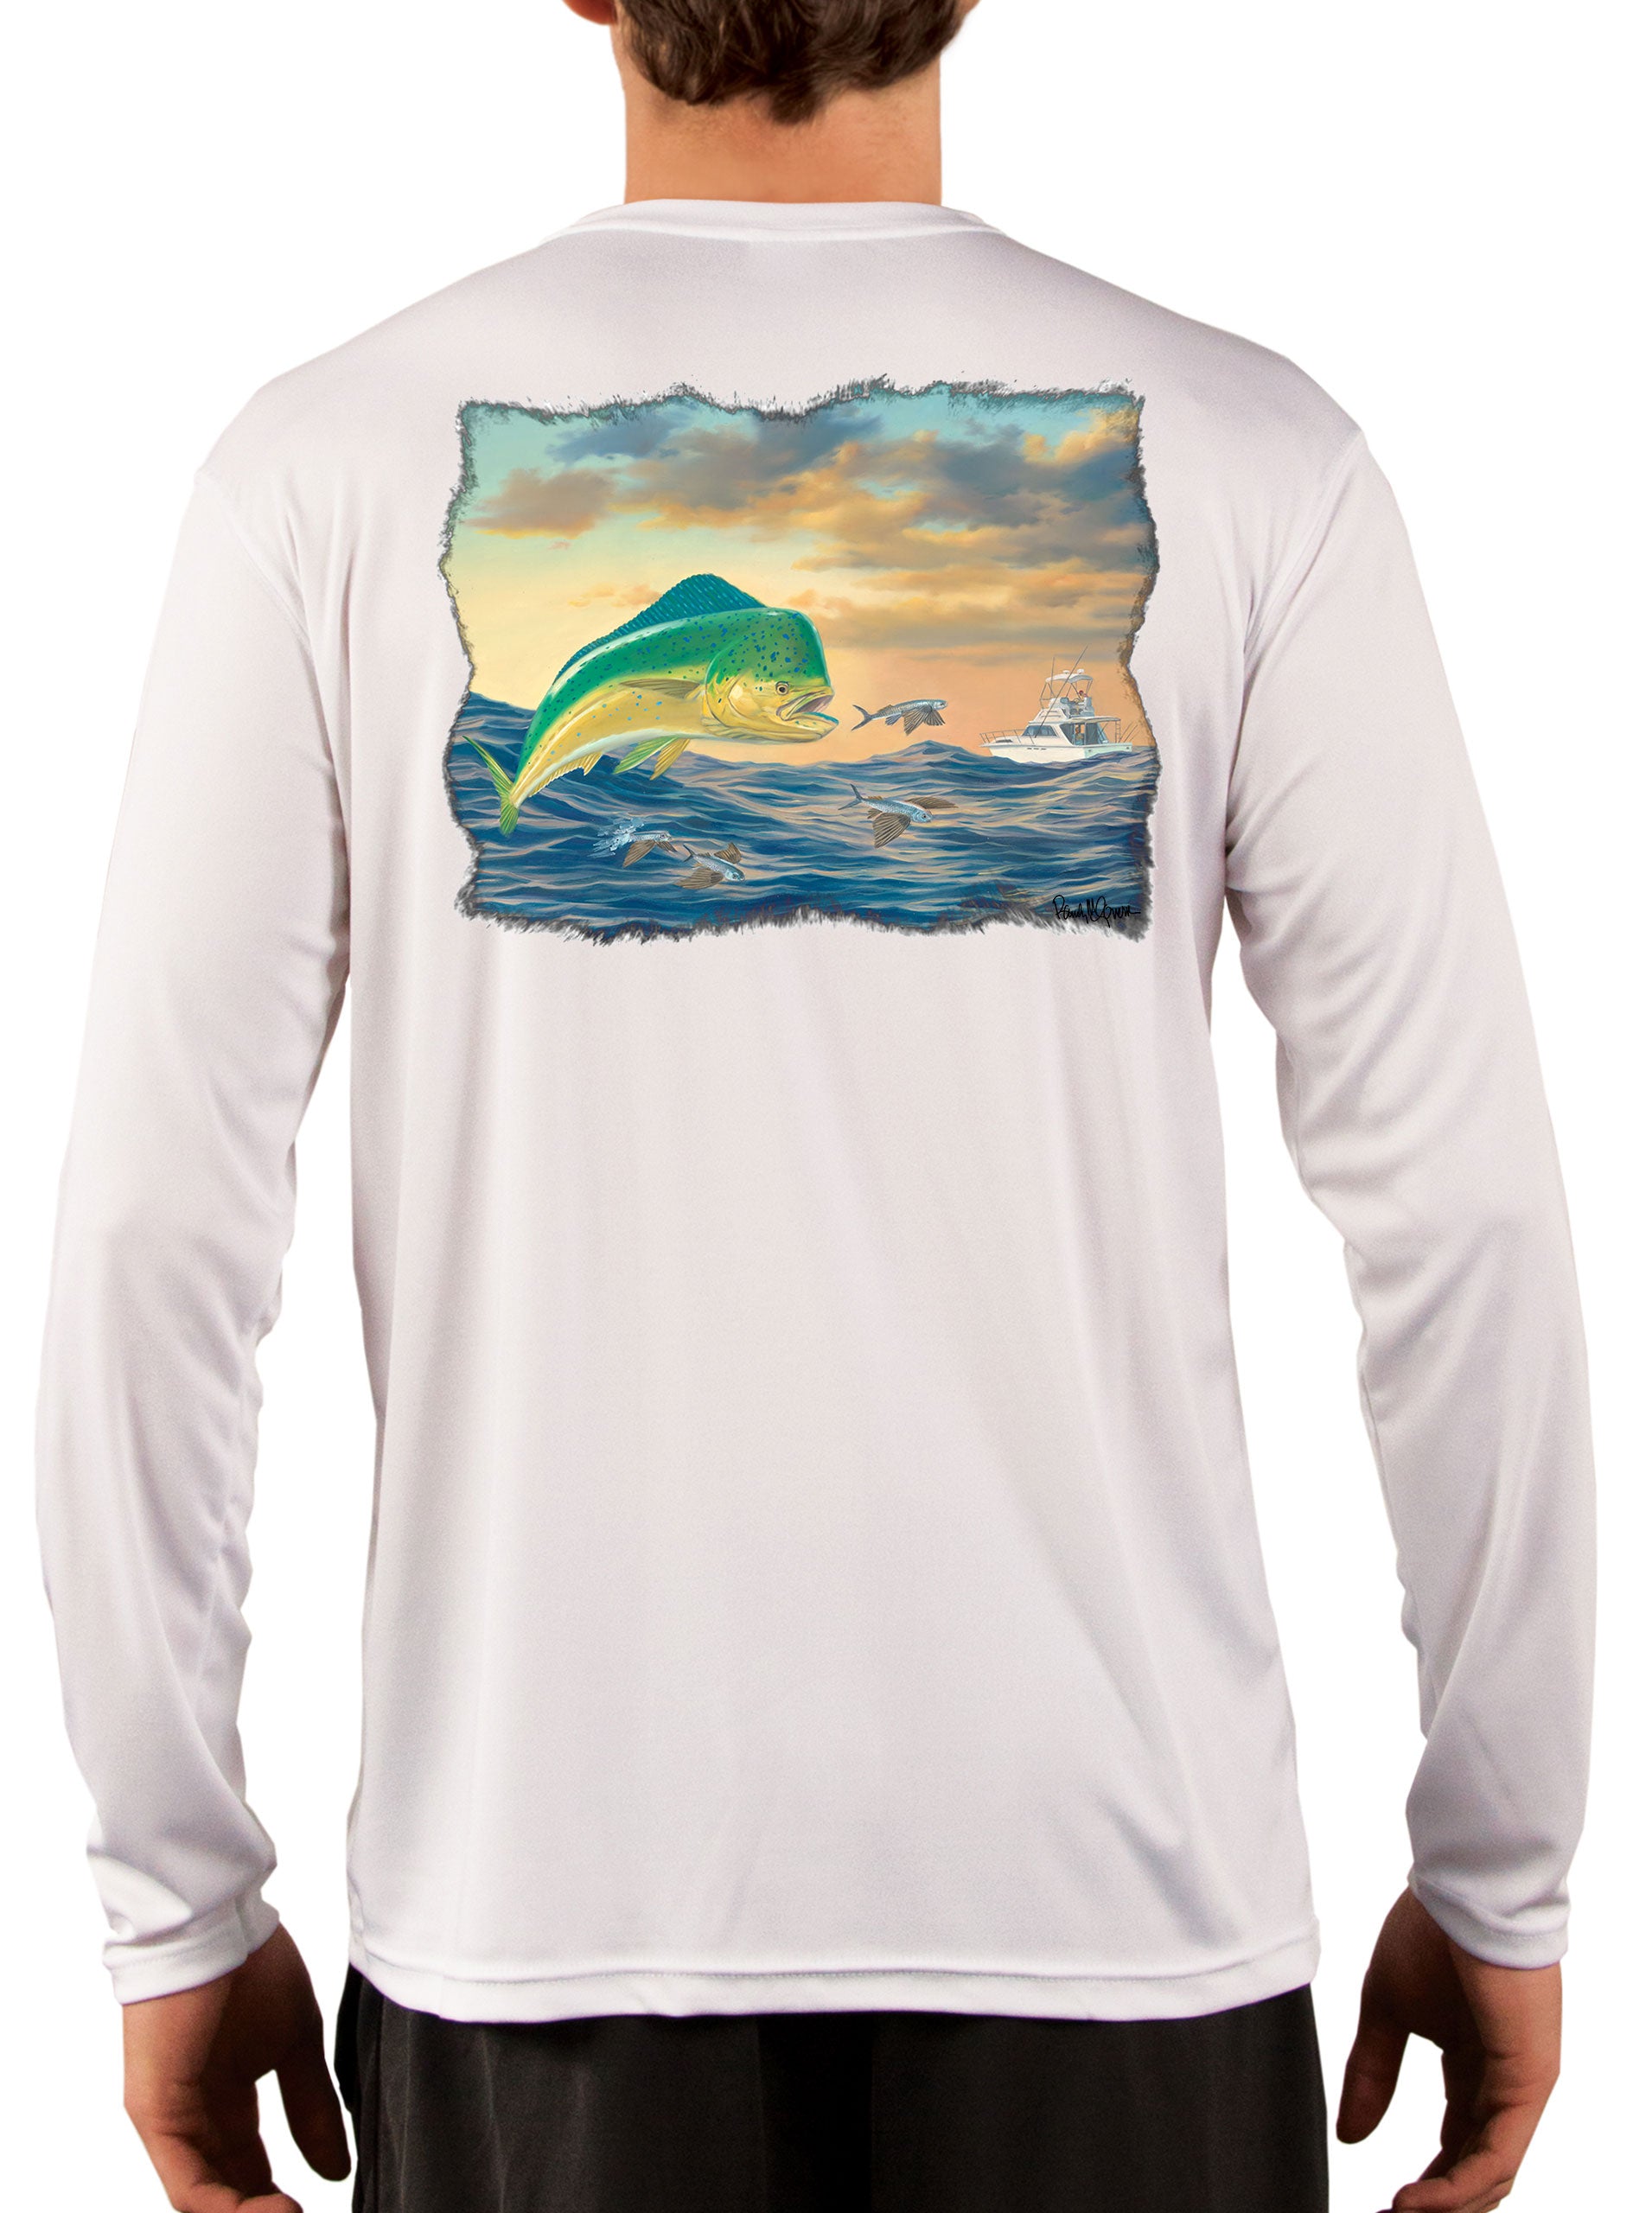 Mahi-mahi with Flying Fish Fishing Shirts for Men Featuring Dorado / Dolphinfish Art by Randy McGovern Small / White